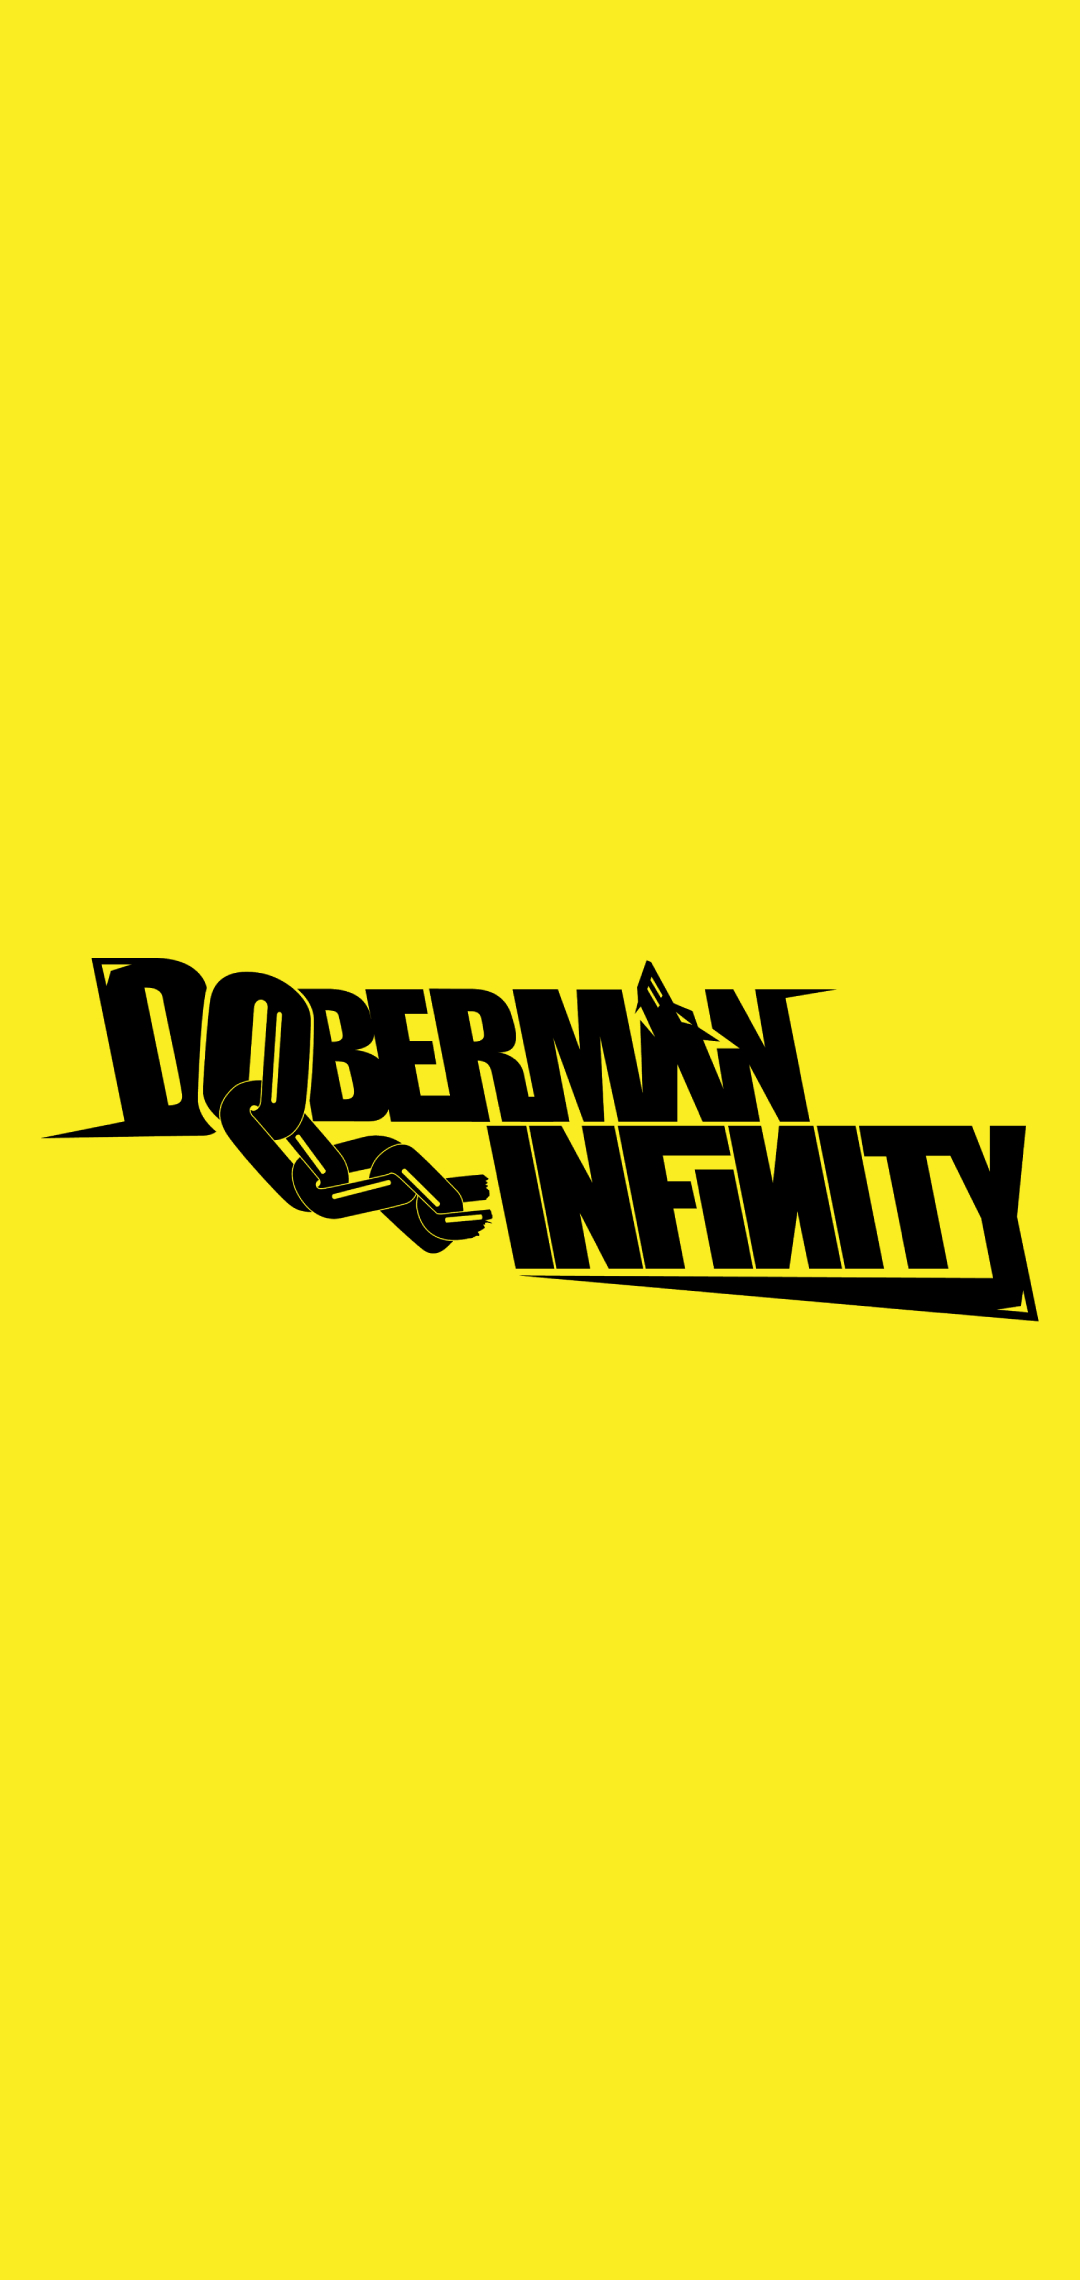 Doberman Infinity ロゴ Aquos Sense4 壁紙 待ち受け スマラン